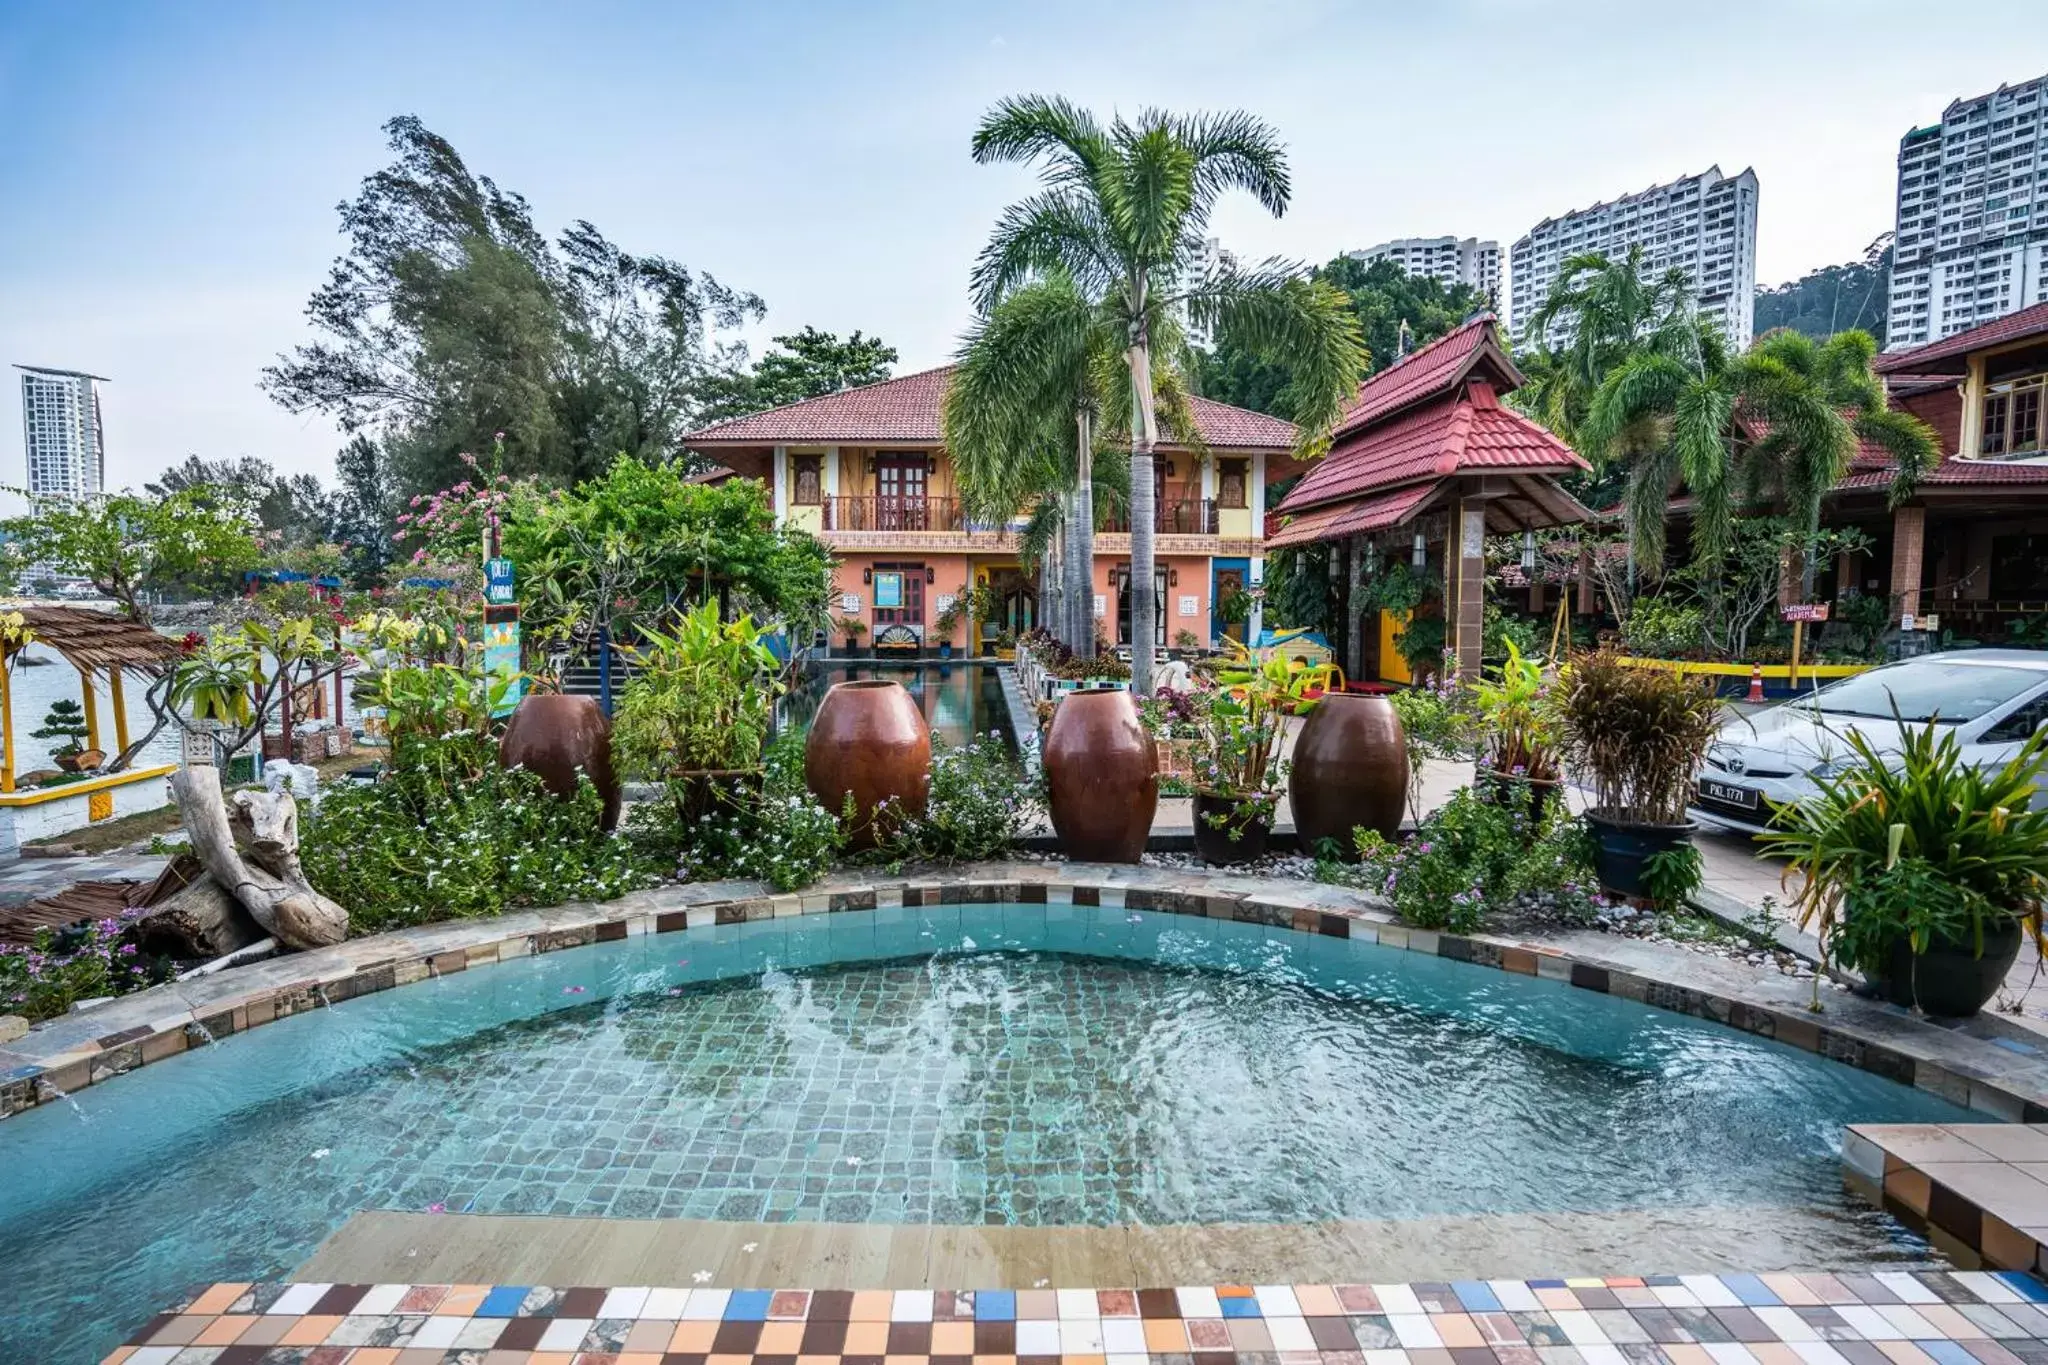 Swimming Pool in Lost Paradise Resort